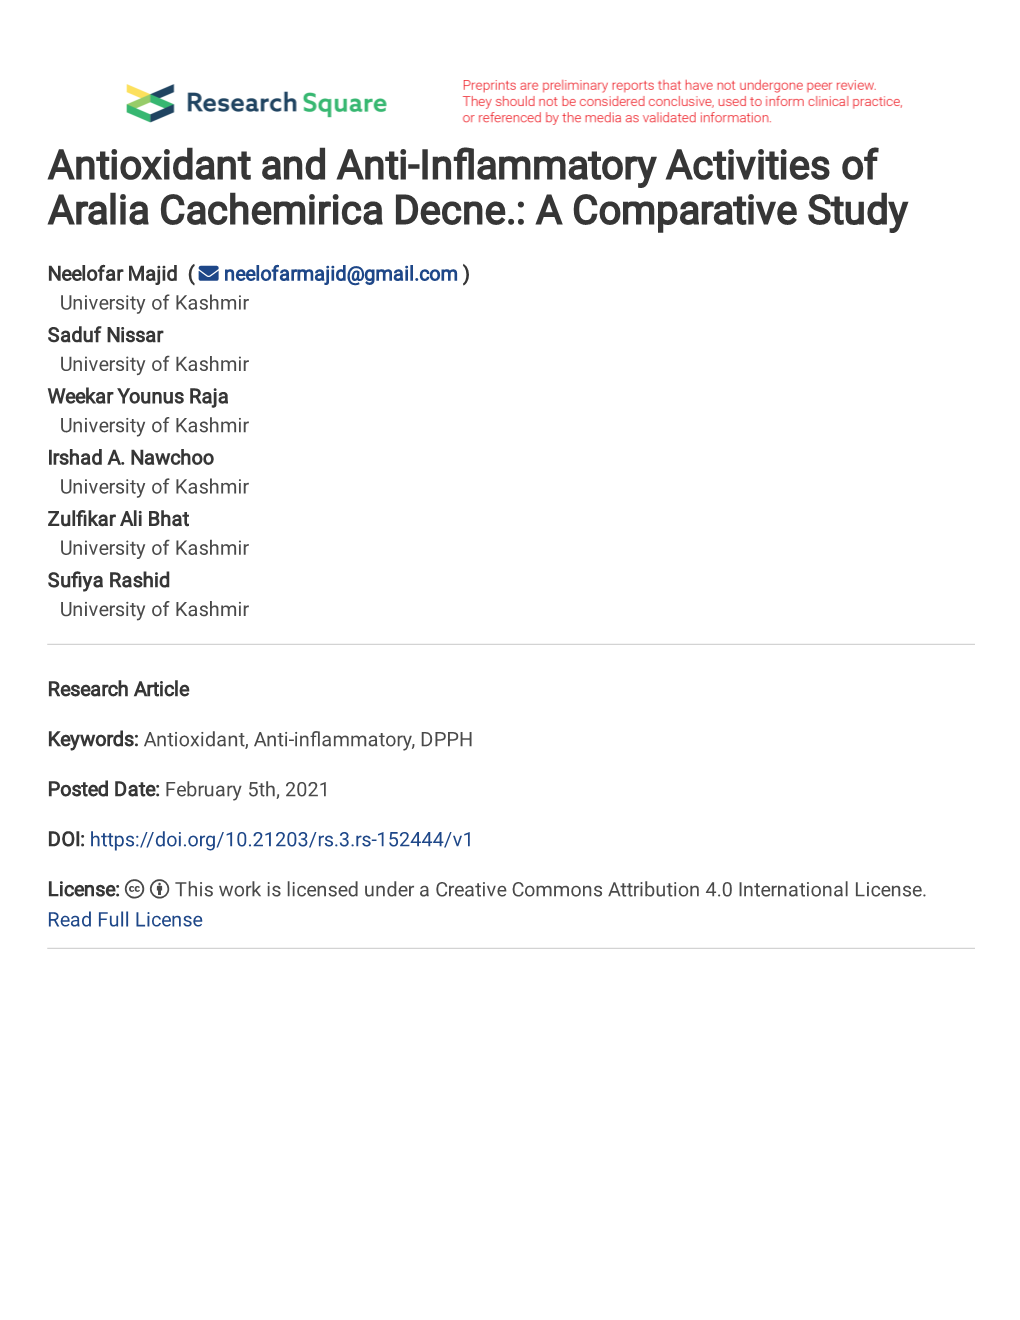 Antioxidant and Anti-Inflammatory Activities of Aralia Cachemirica Decne.: a Comparative Study